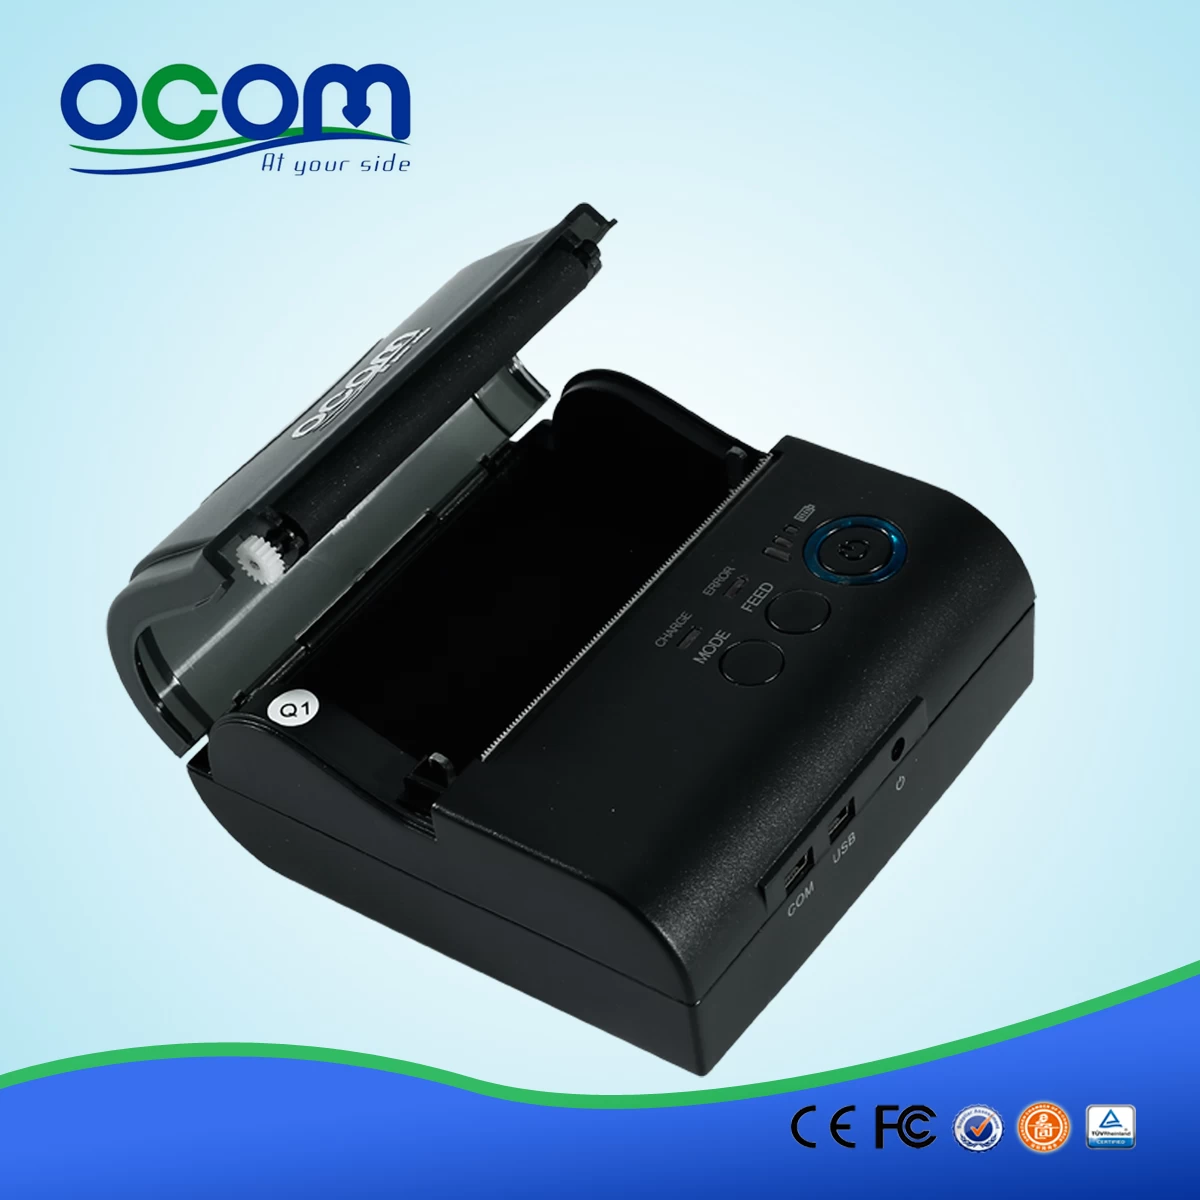 Bluetooth Printer 80mm Mobile OCPP-M082